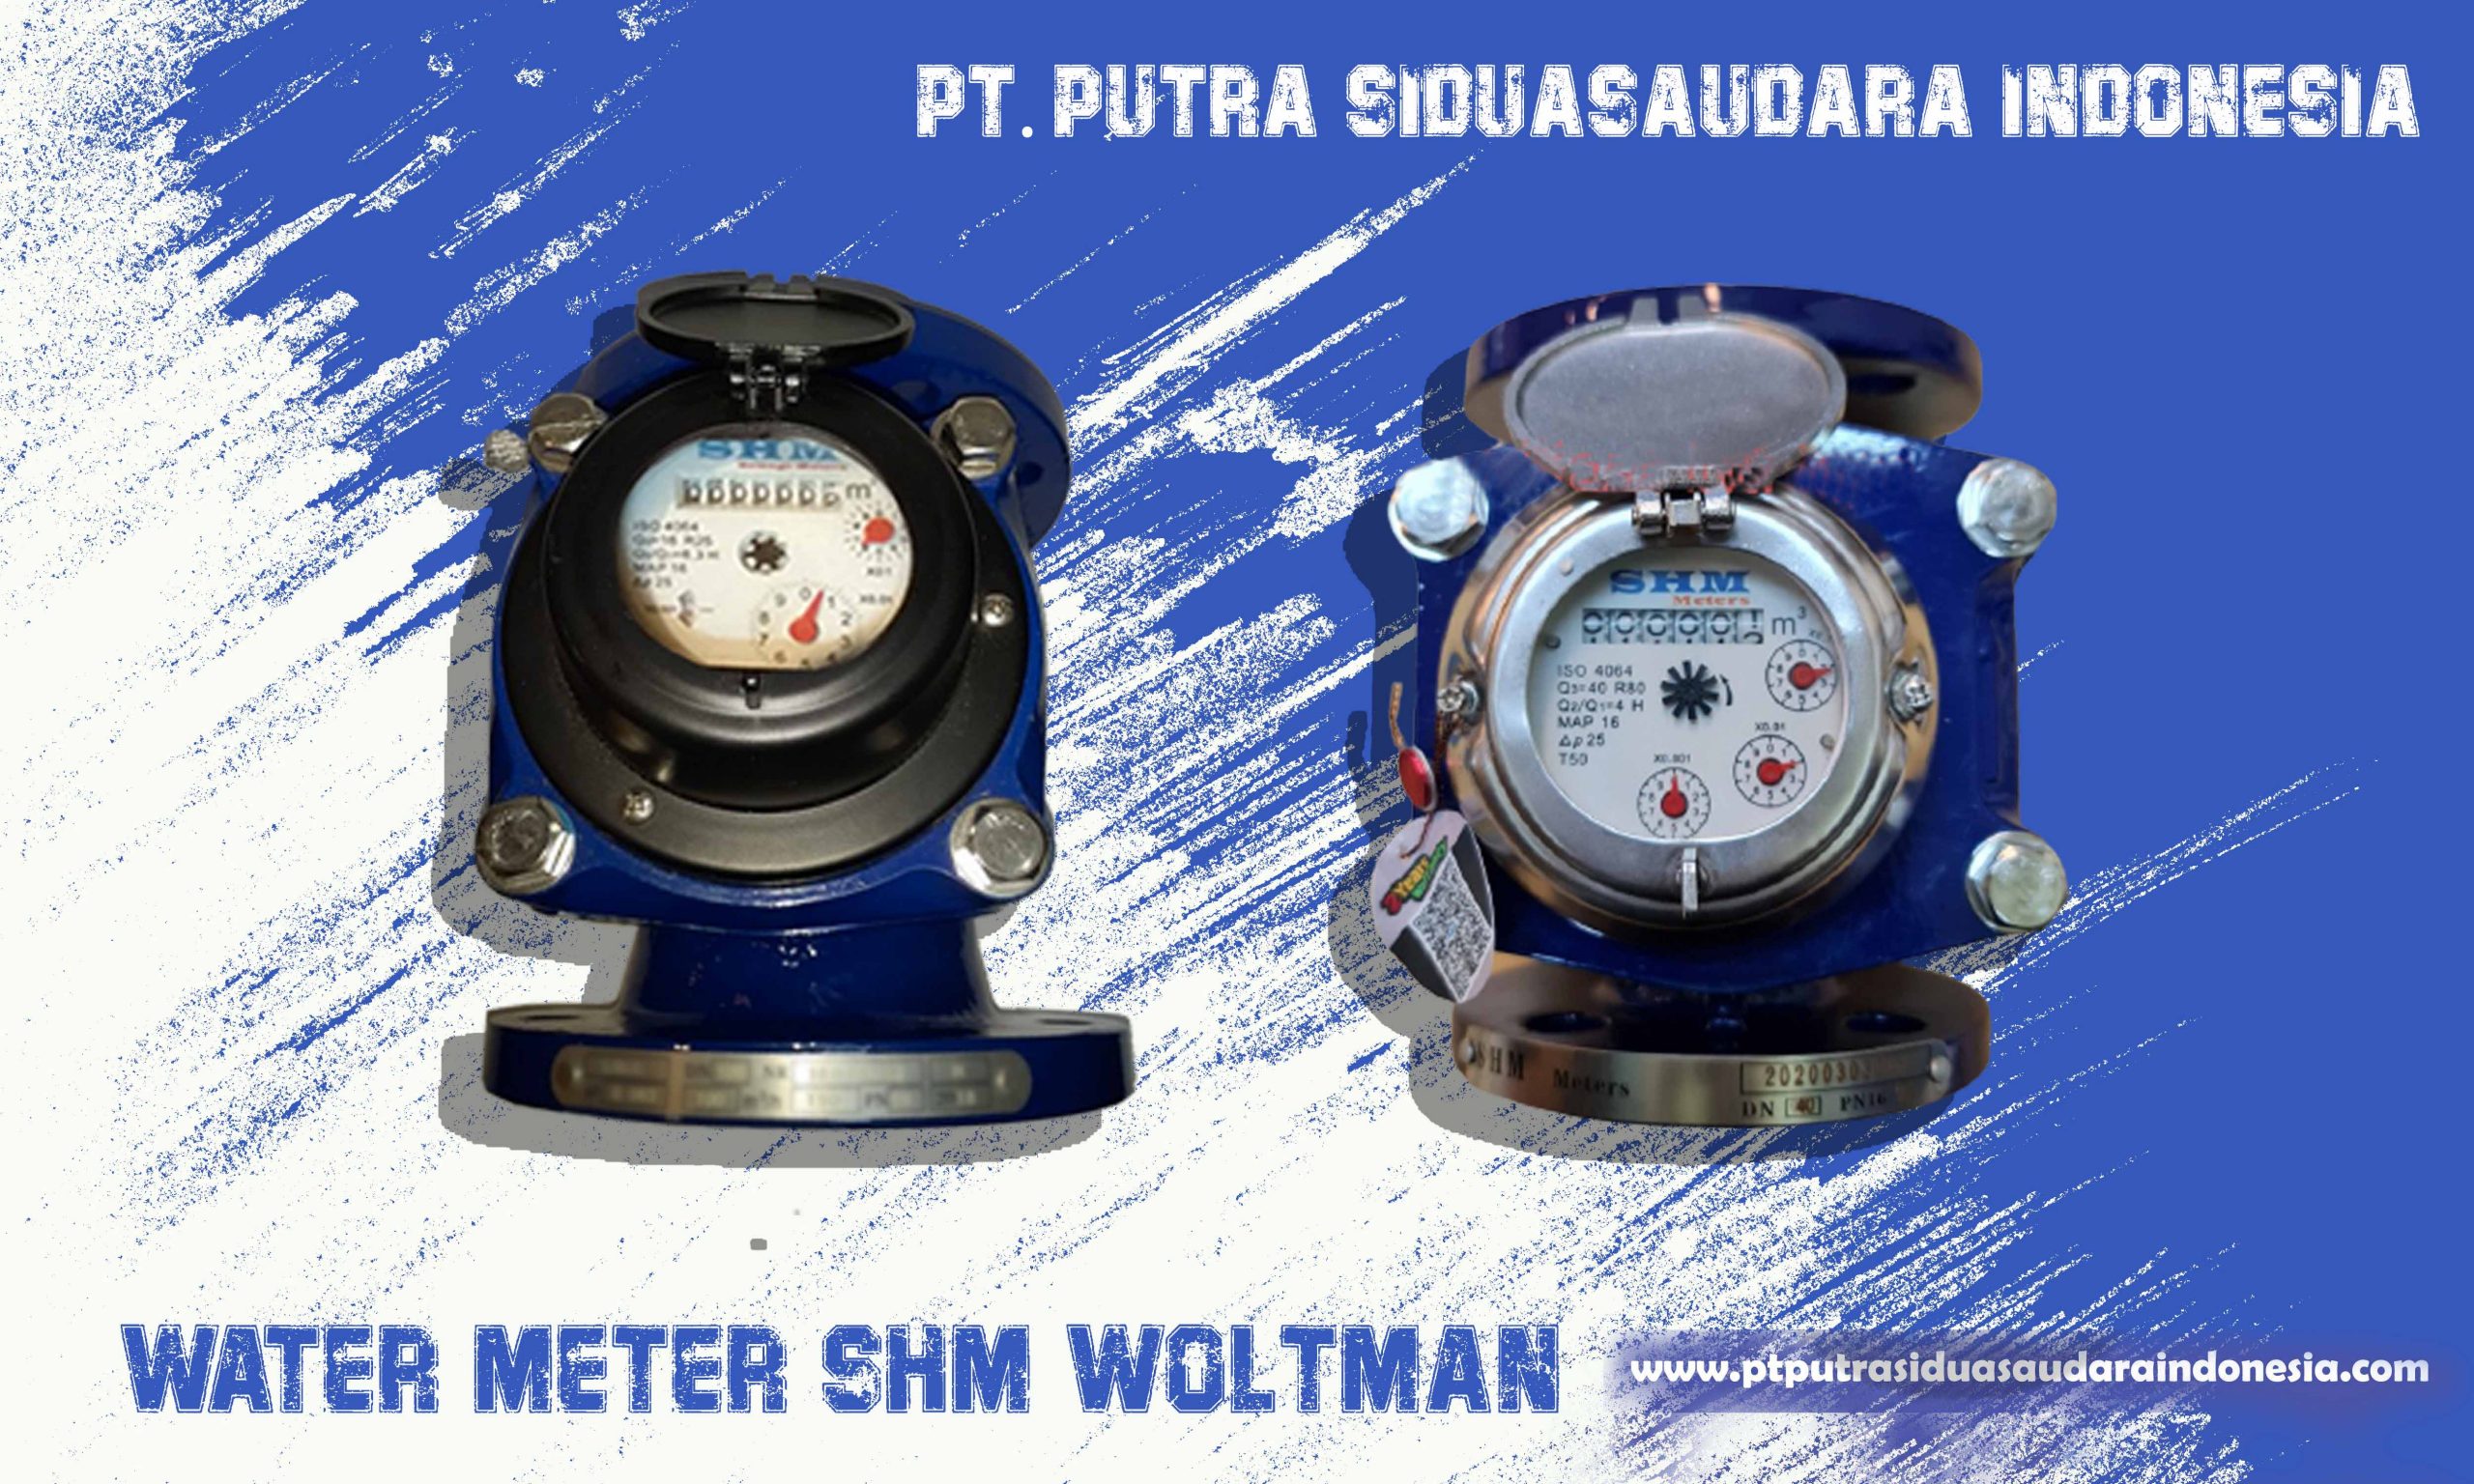 Water Meter SHM Woltman